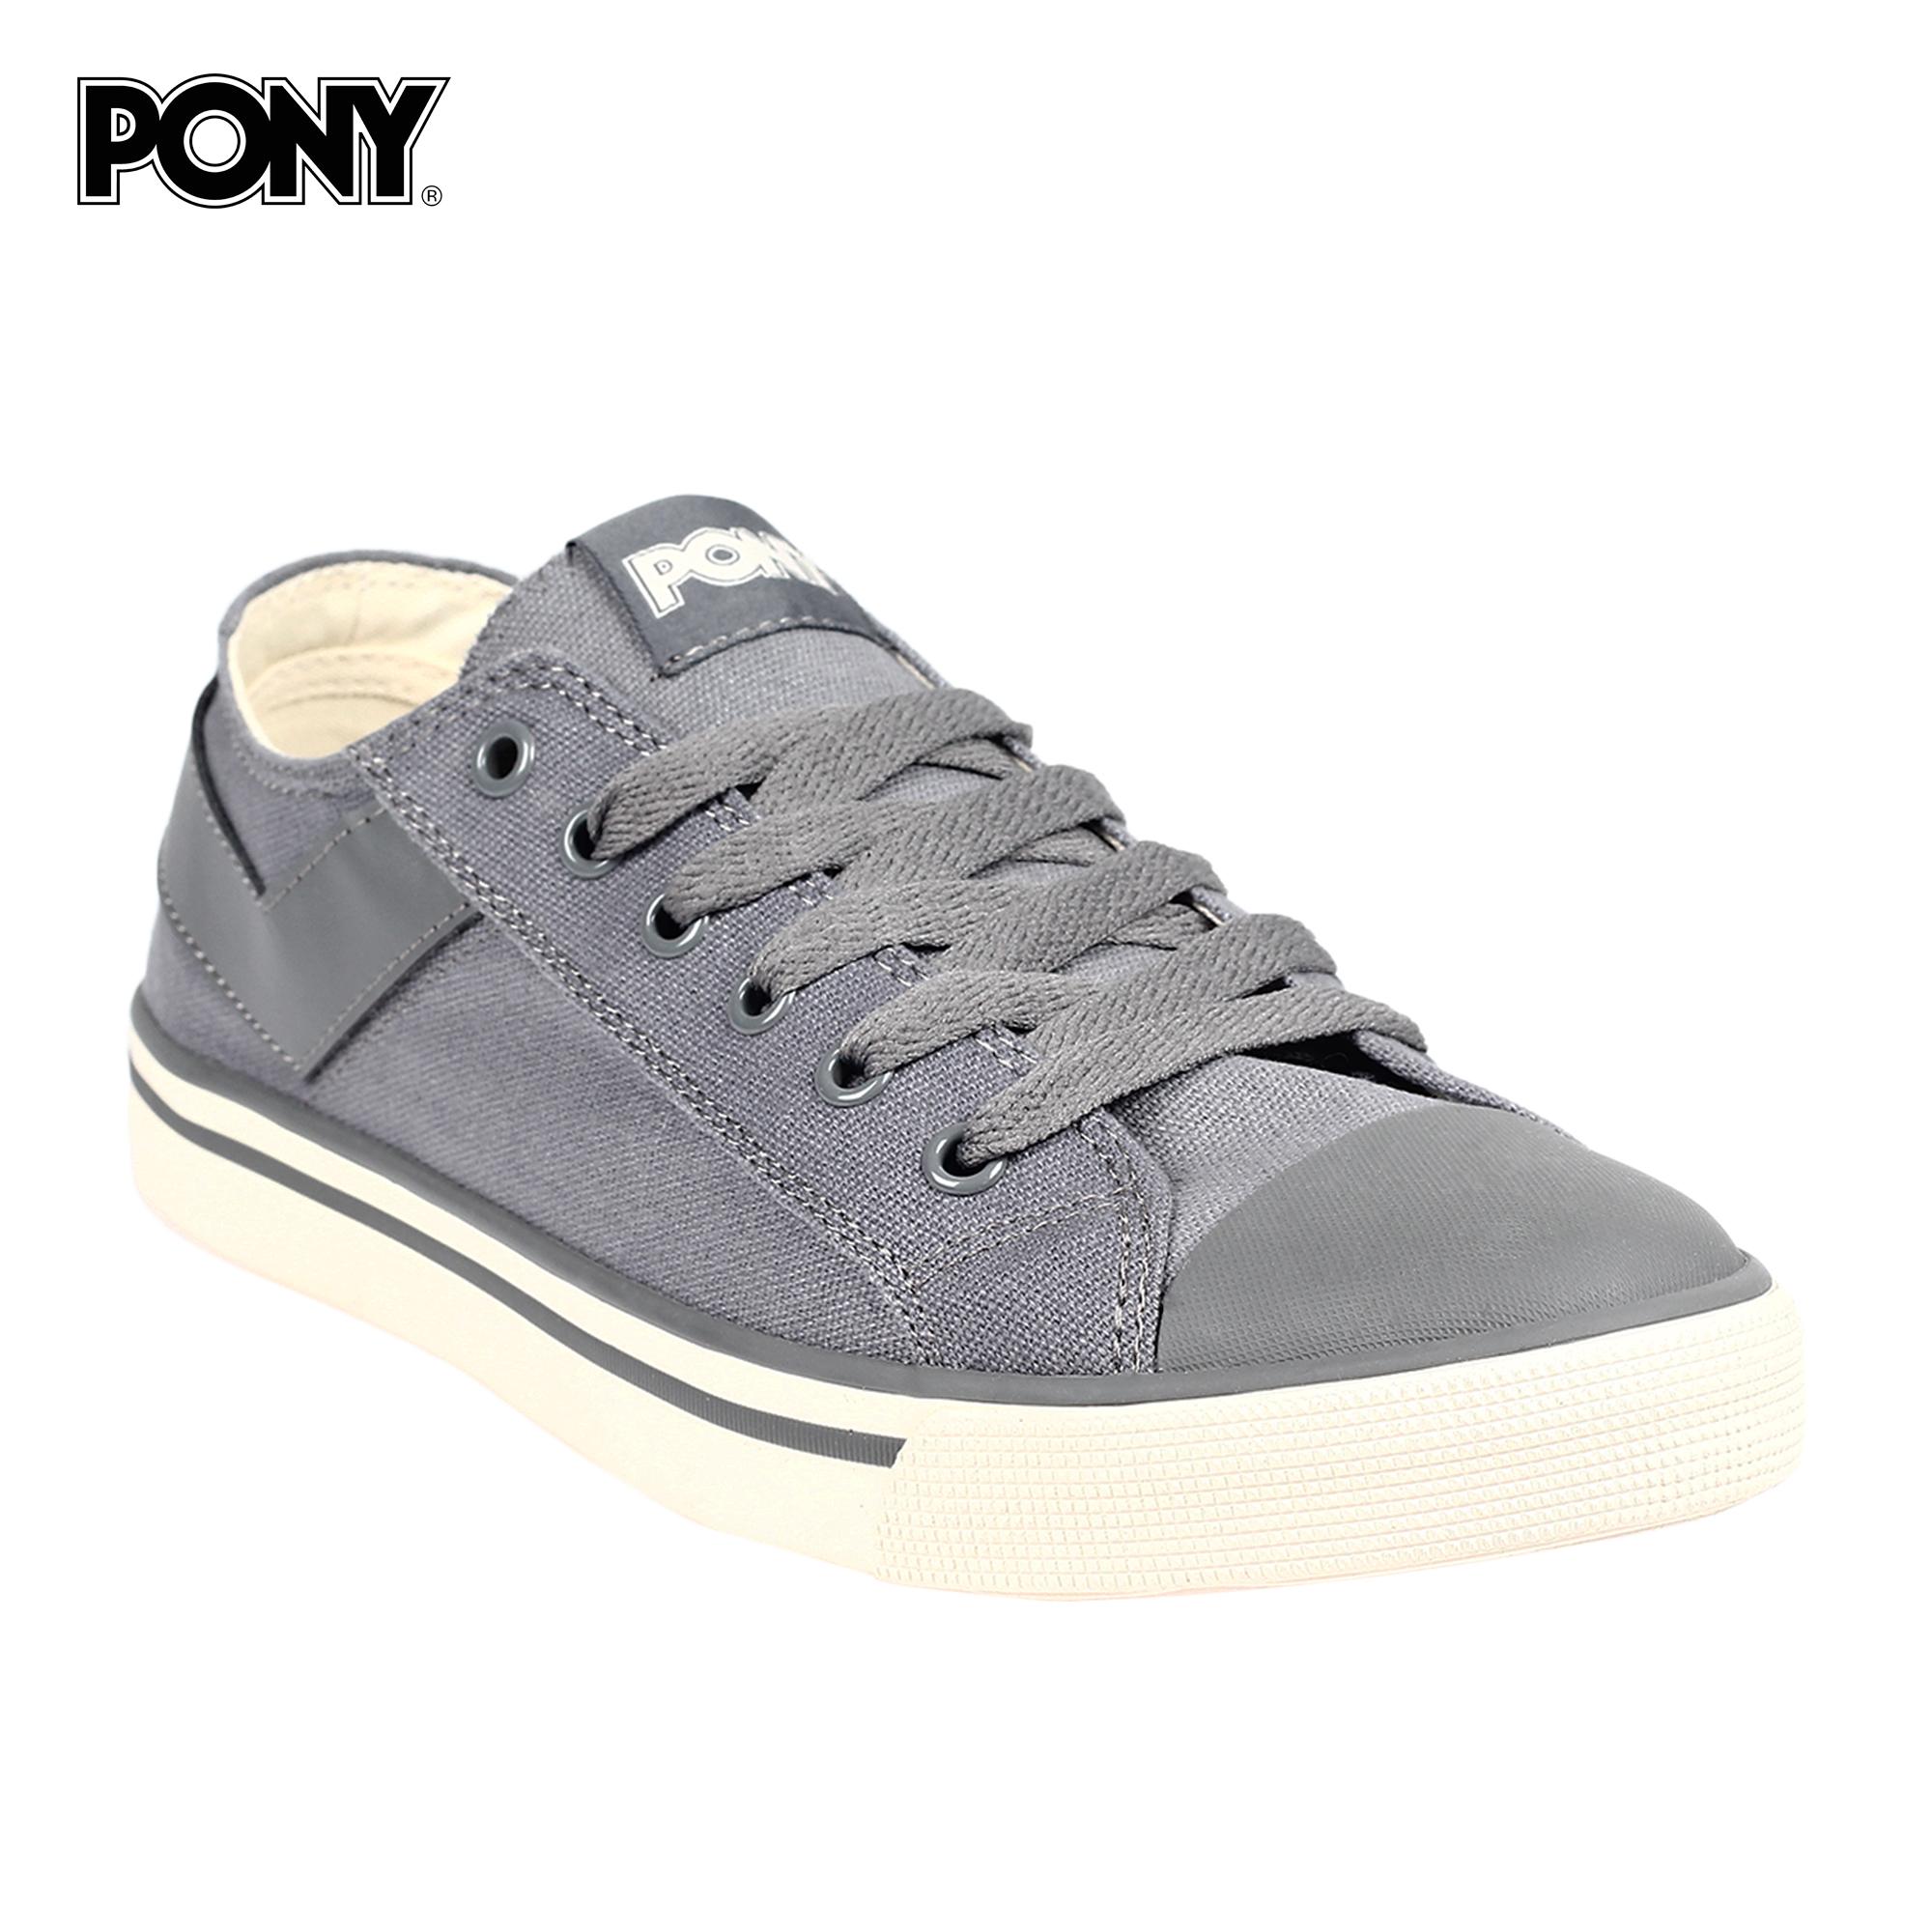 pony shoes mens